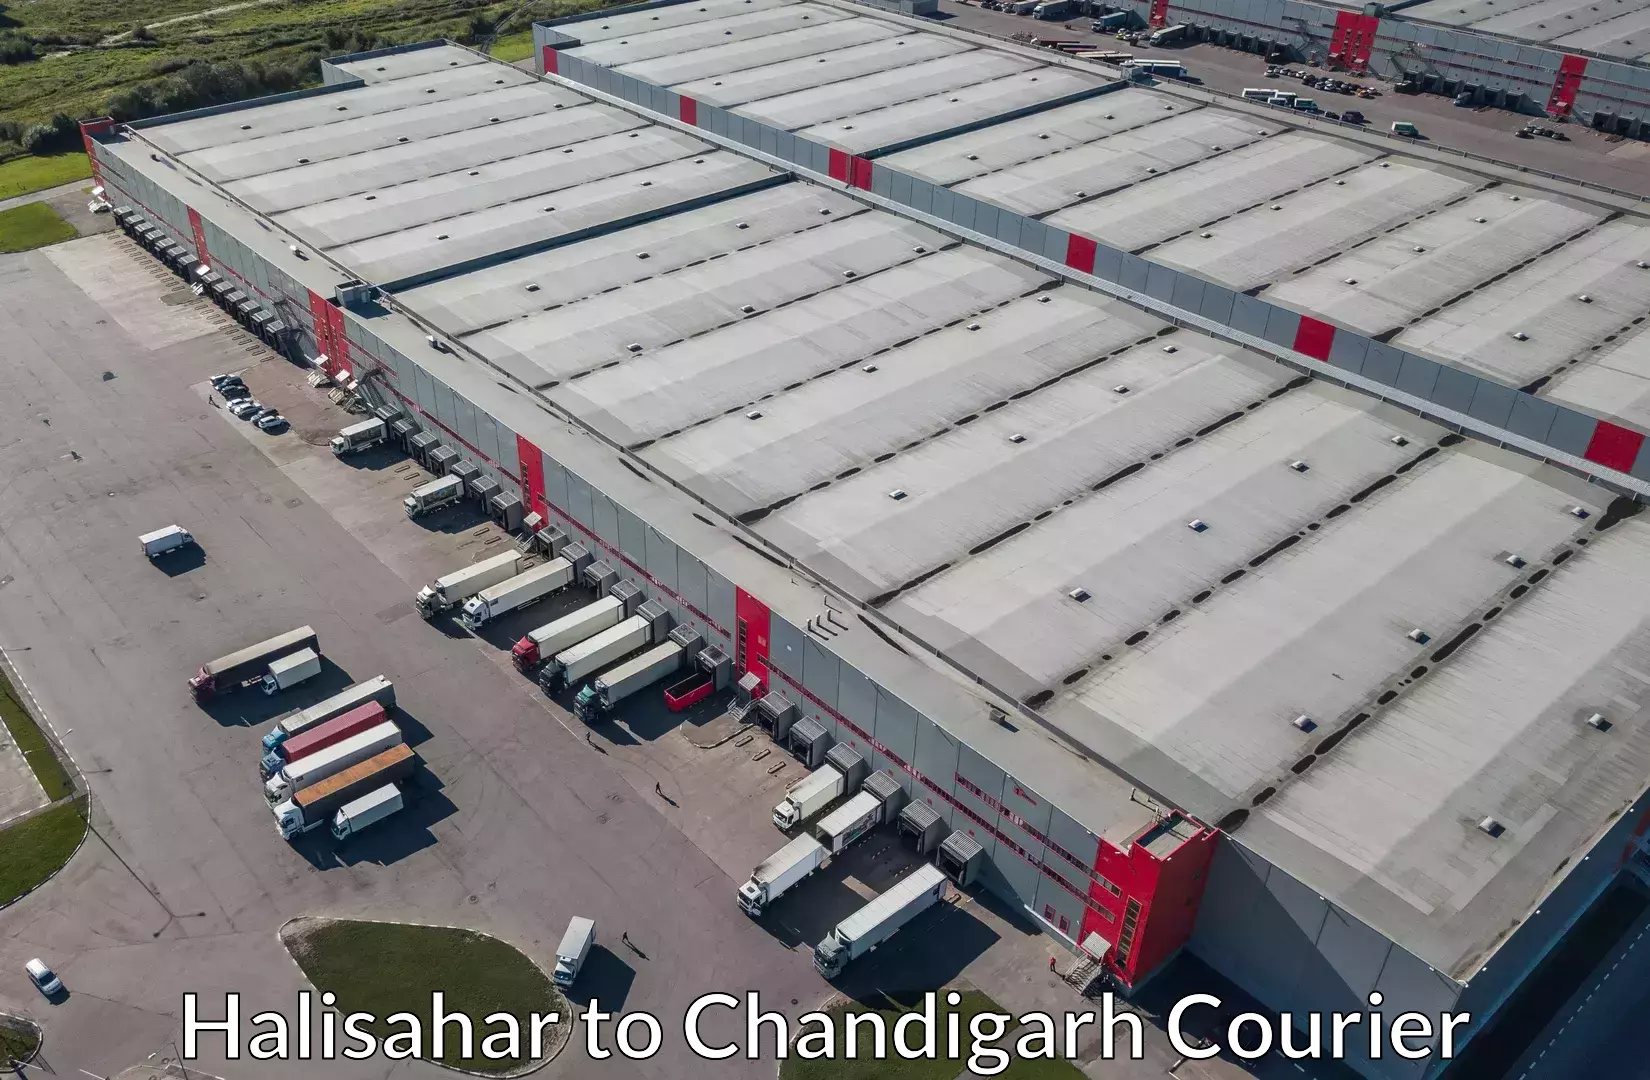 Luggage shipment specialists Halisahar to Chandigarh